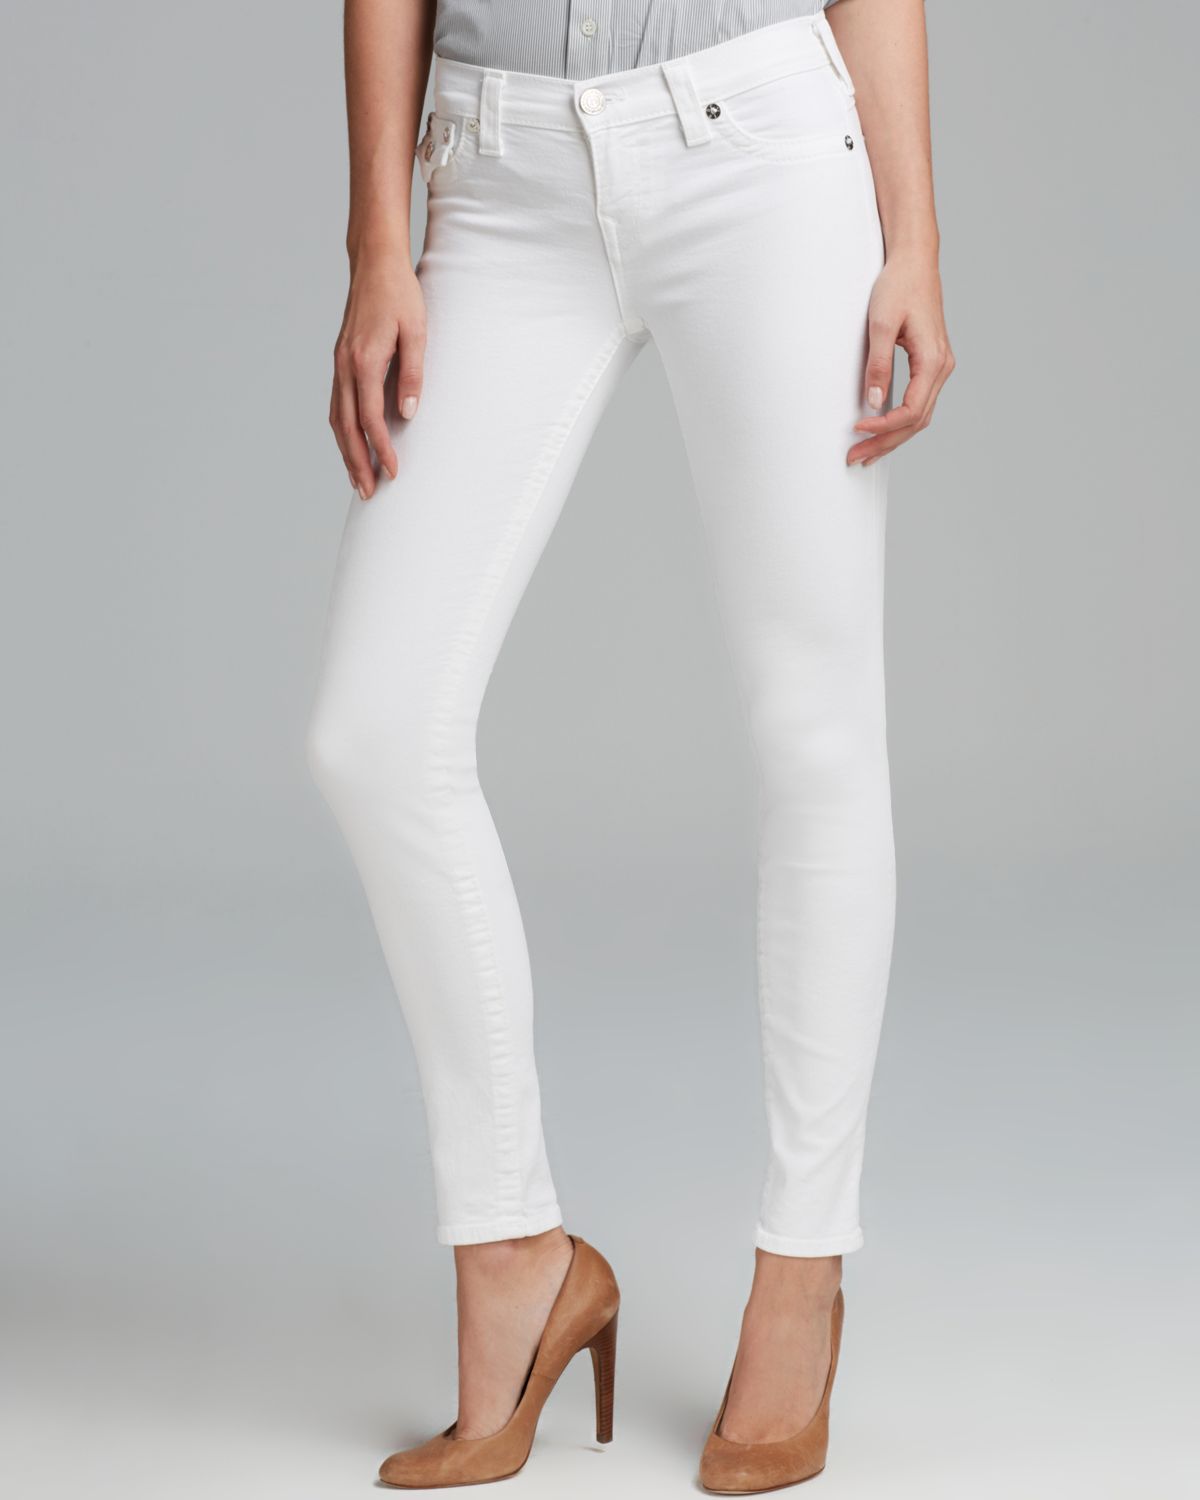 Lyst - True religion Jeans Serena Skinny in Optic White in White